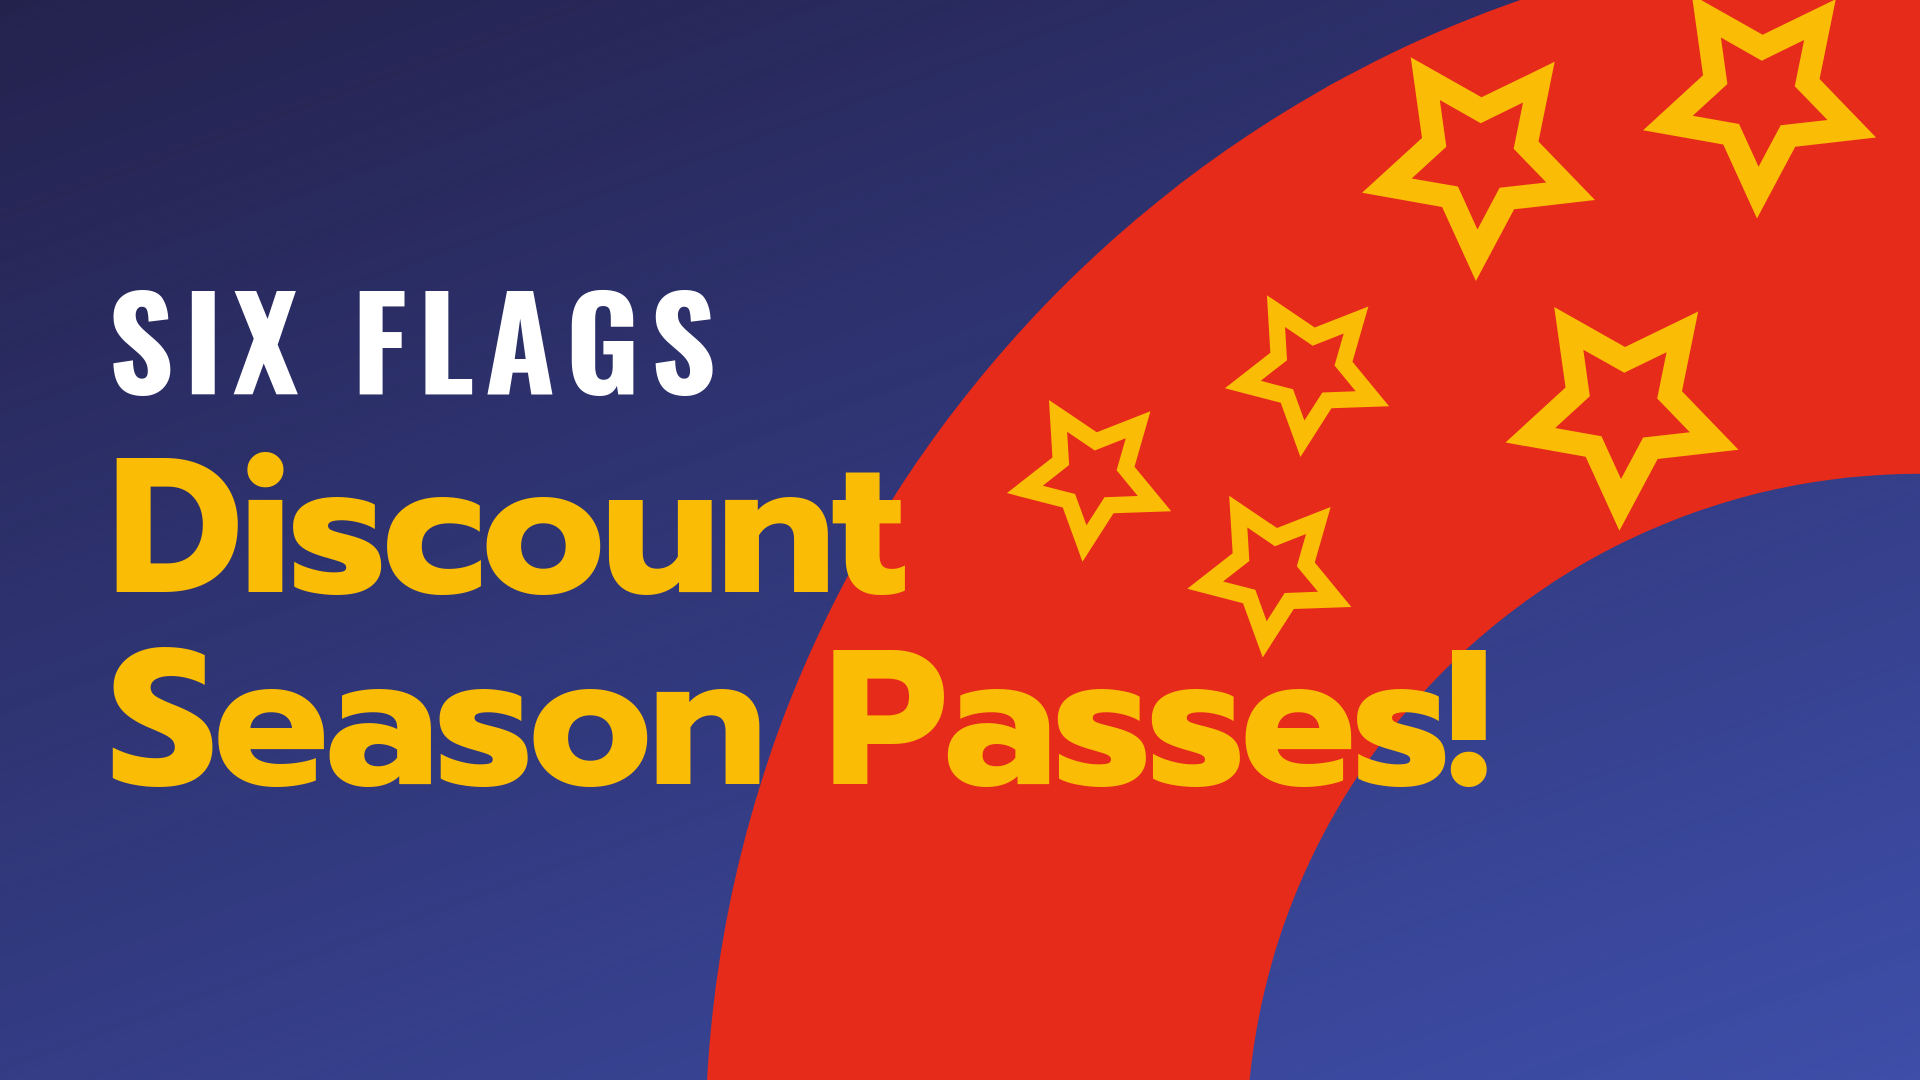 Six Flags Season Pass Discounts